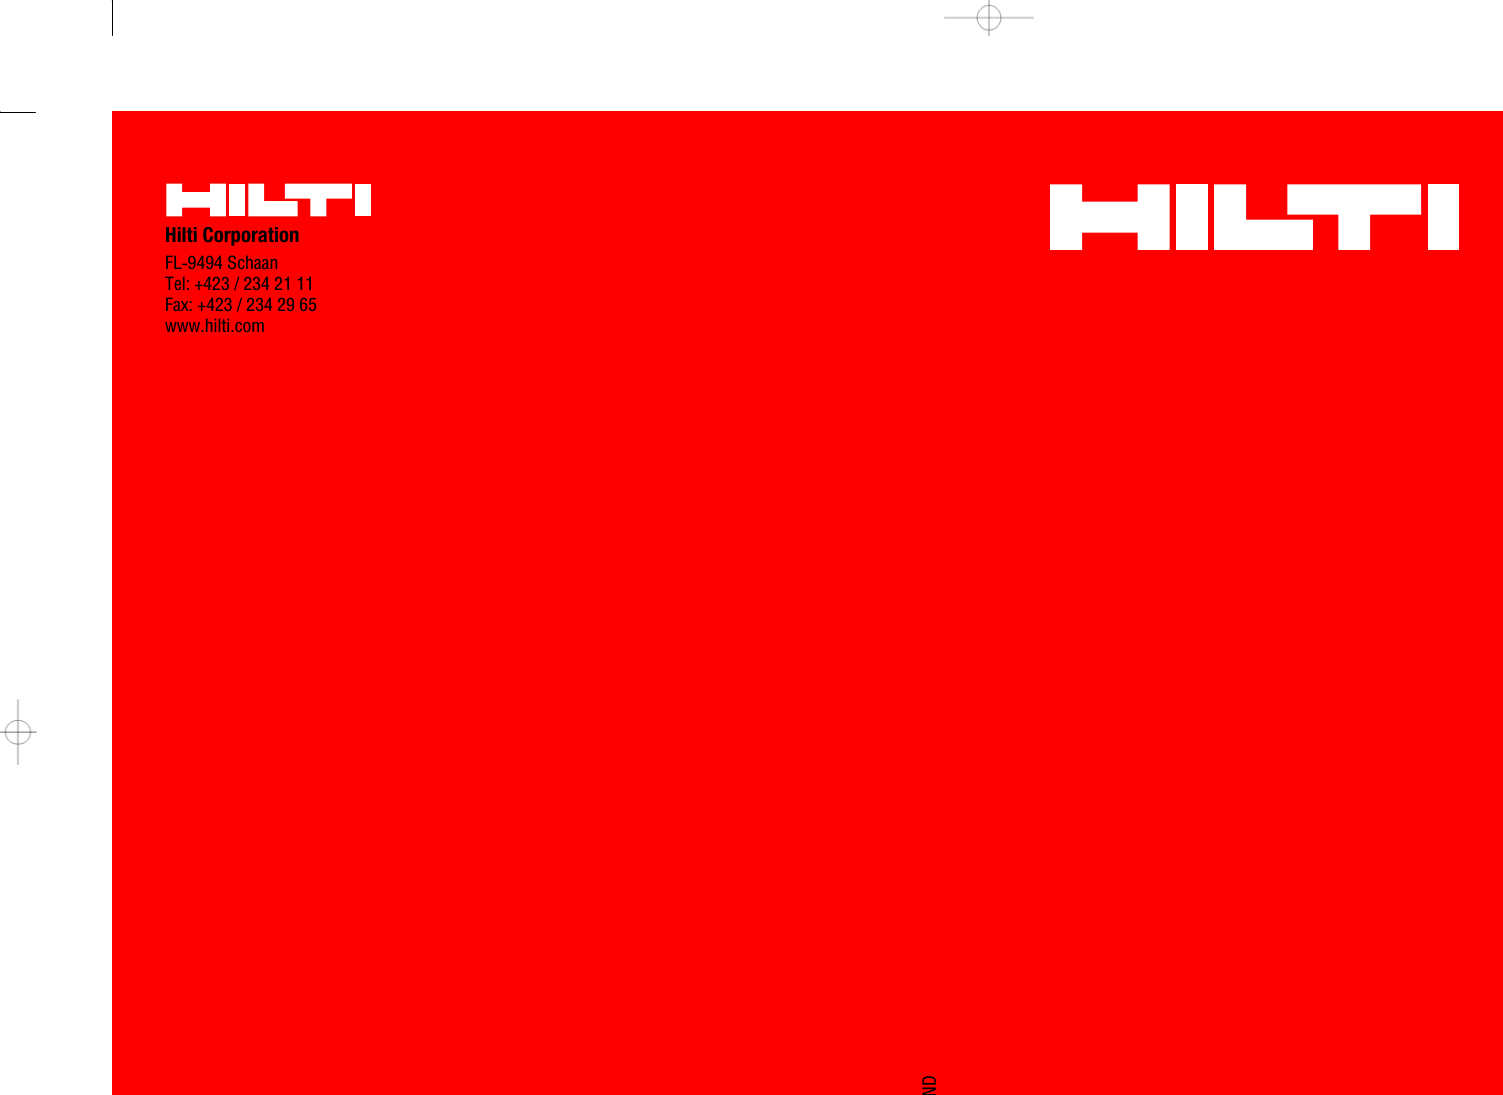    Hilti CorporationFL‑9494 SchaanTel: +423 / 234 21 11Fax: +423 / 234 29 65www.hilti.comND